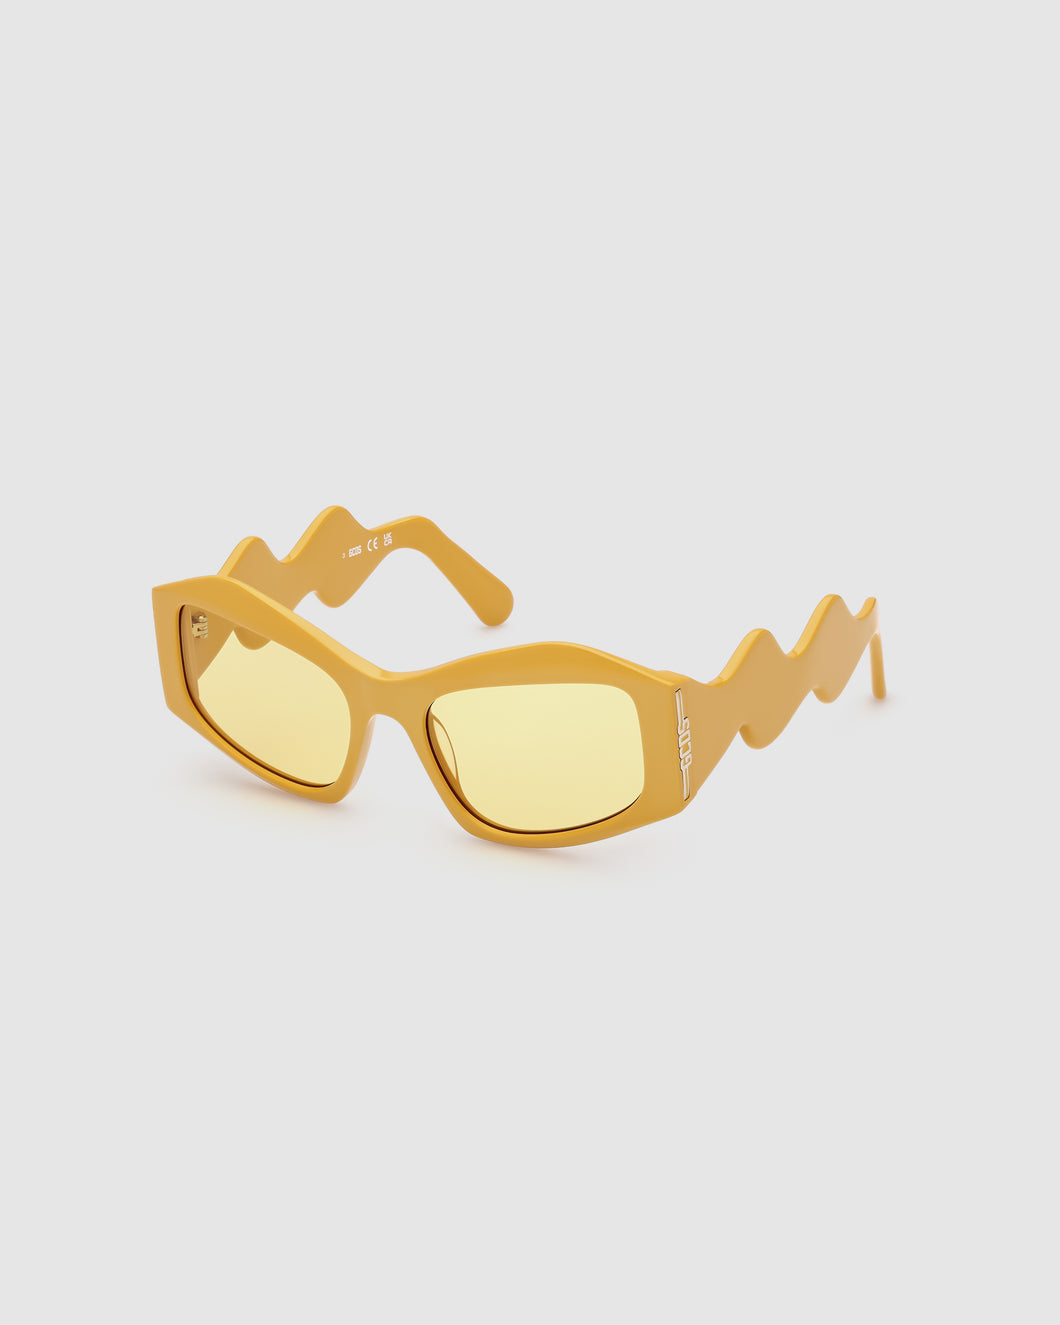 GD023 GEOMETRIC SUNGLASSES: Unisex Sunglasses Yellow | GCDS